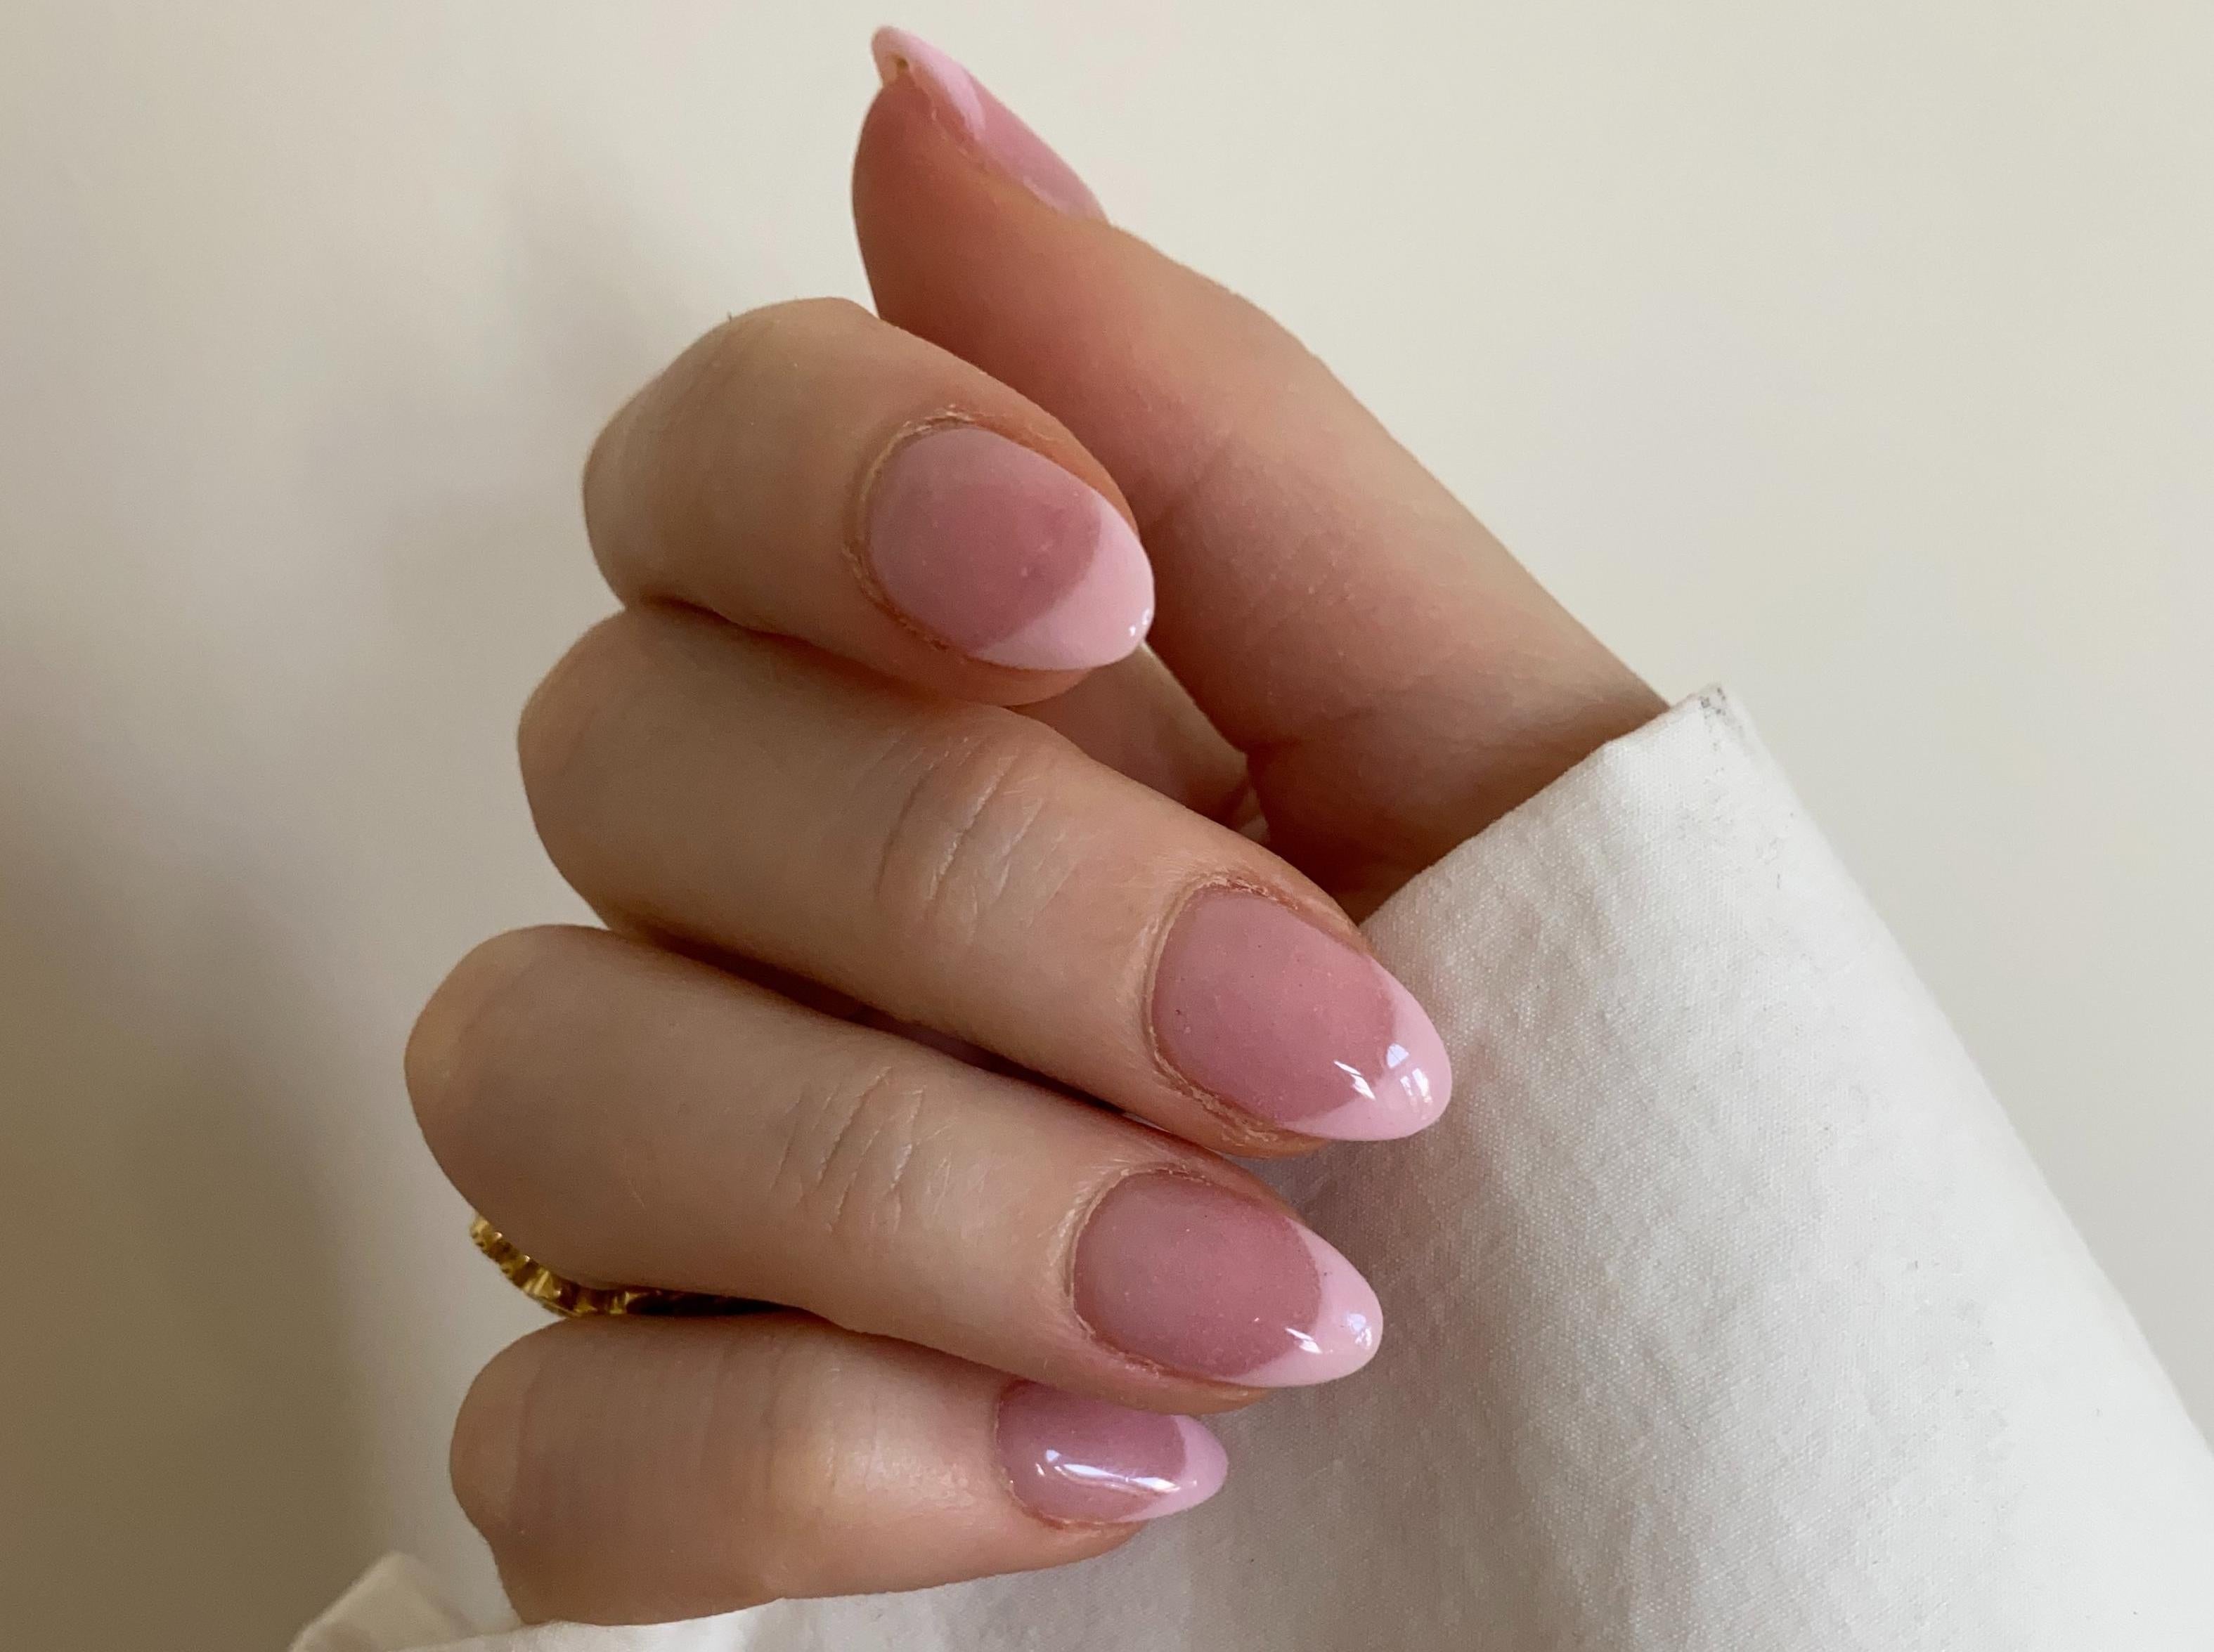 Dip powders nail polish finish powder fun pink coat wet dipped acrylic finger tap pink